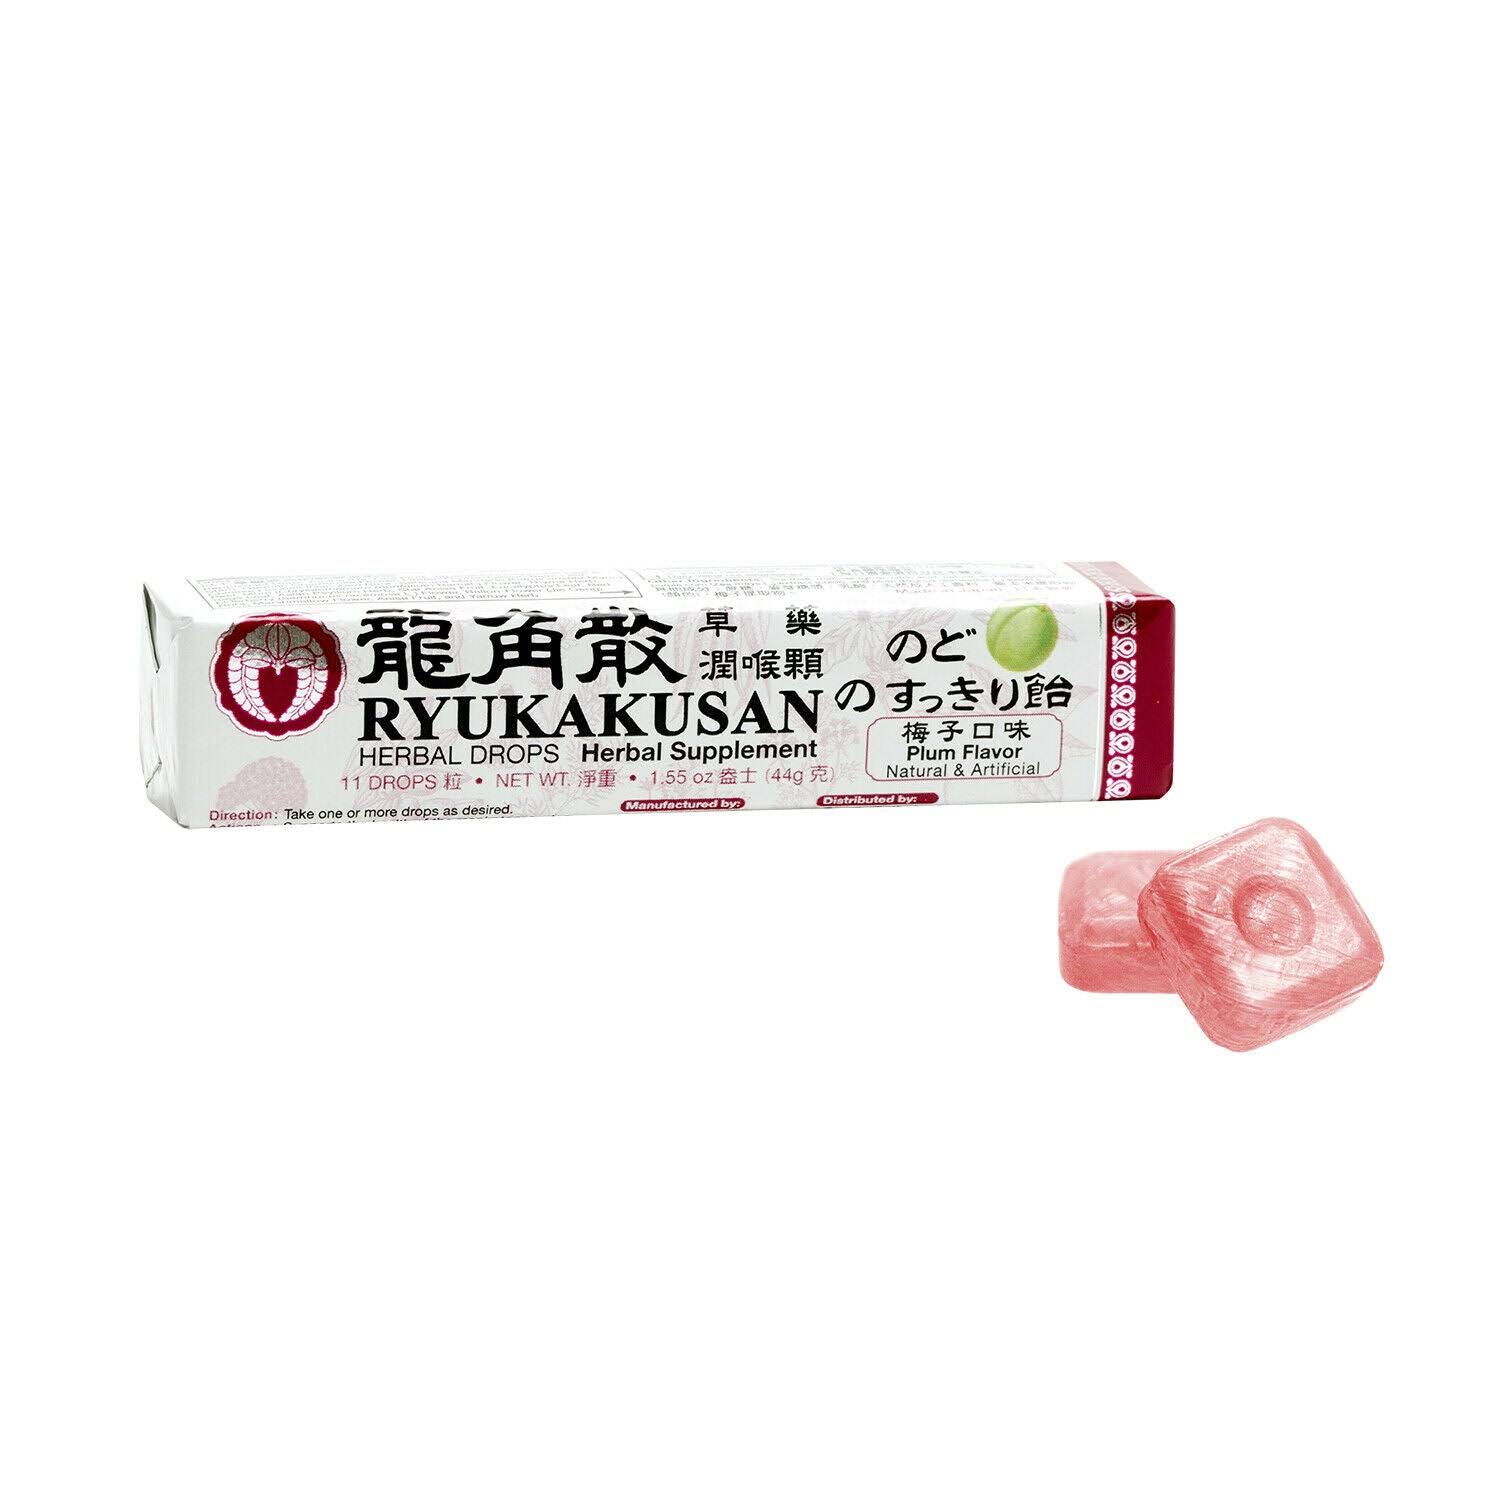 Ryukakusan Herbal Drops - Plum Flavor - 1.55oz/44g/11 Drops x 5 Pack (